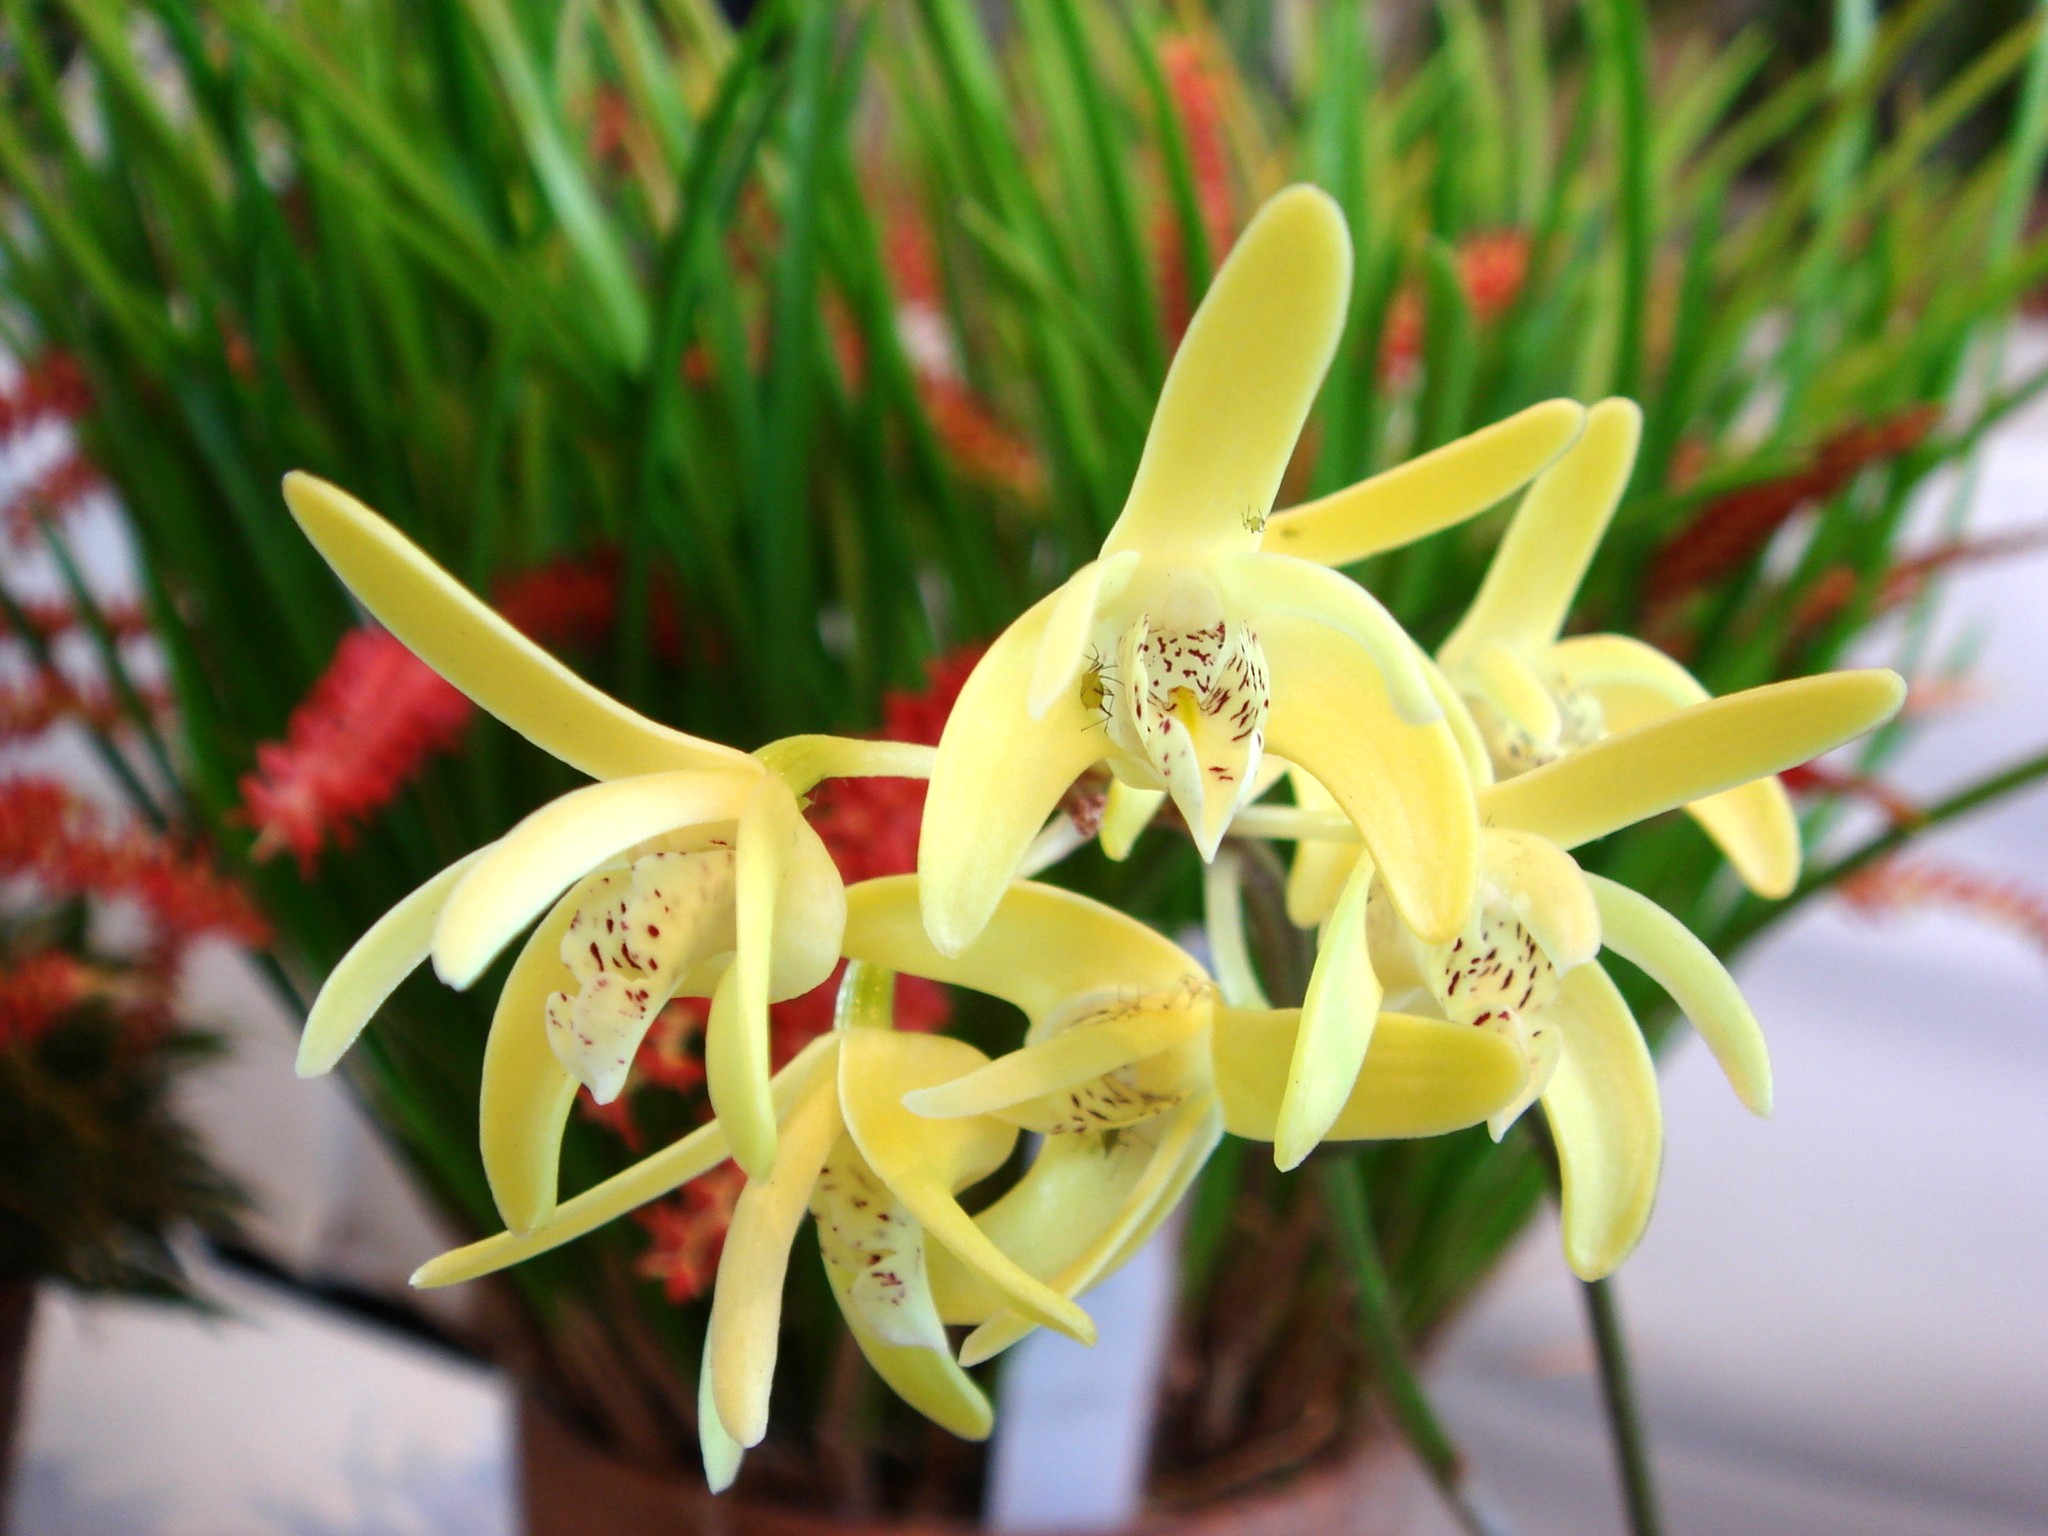 http://orchids.la.coocan.jp/Dendrobium/Dendrobium%20speciosum/DSC09210.JPG